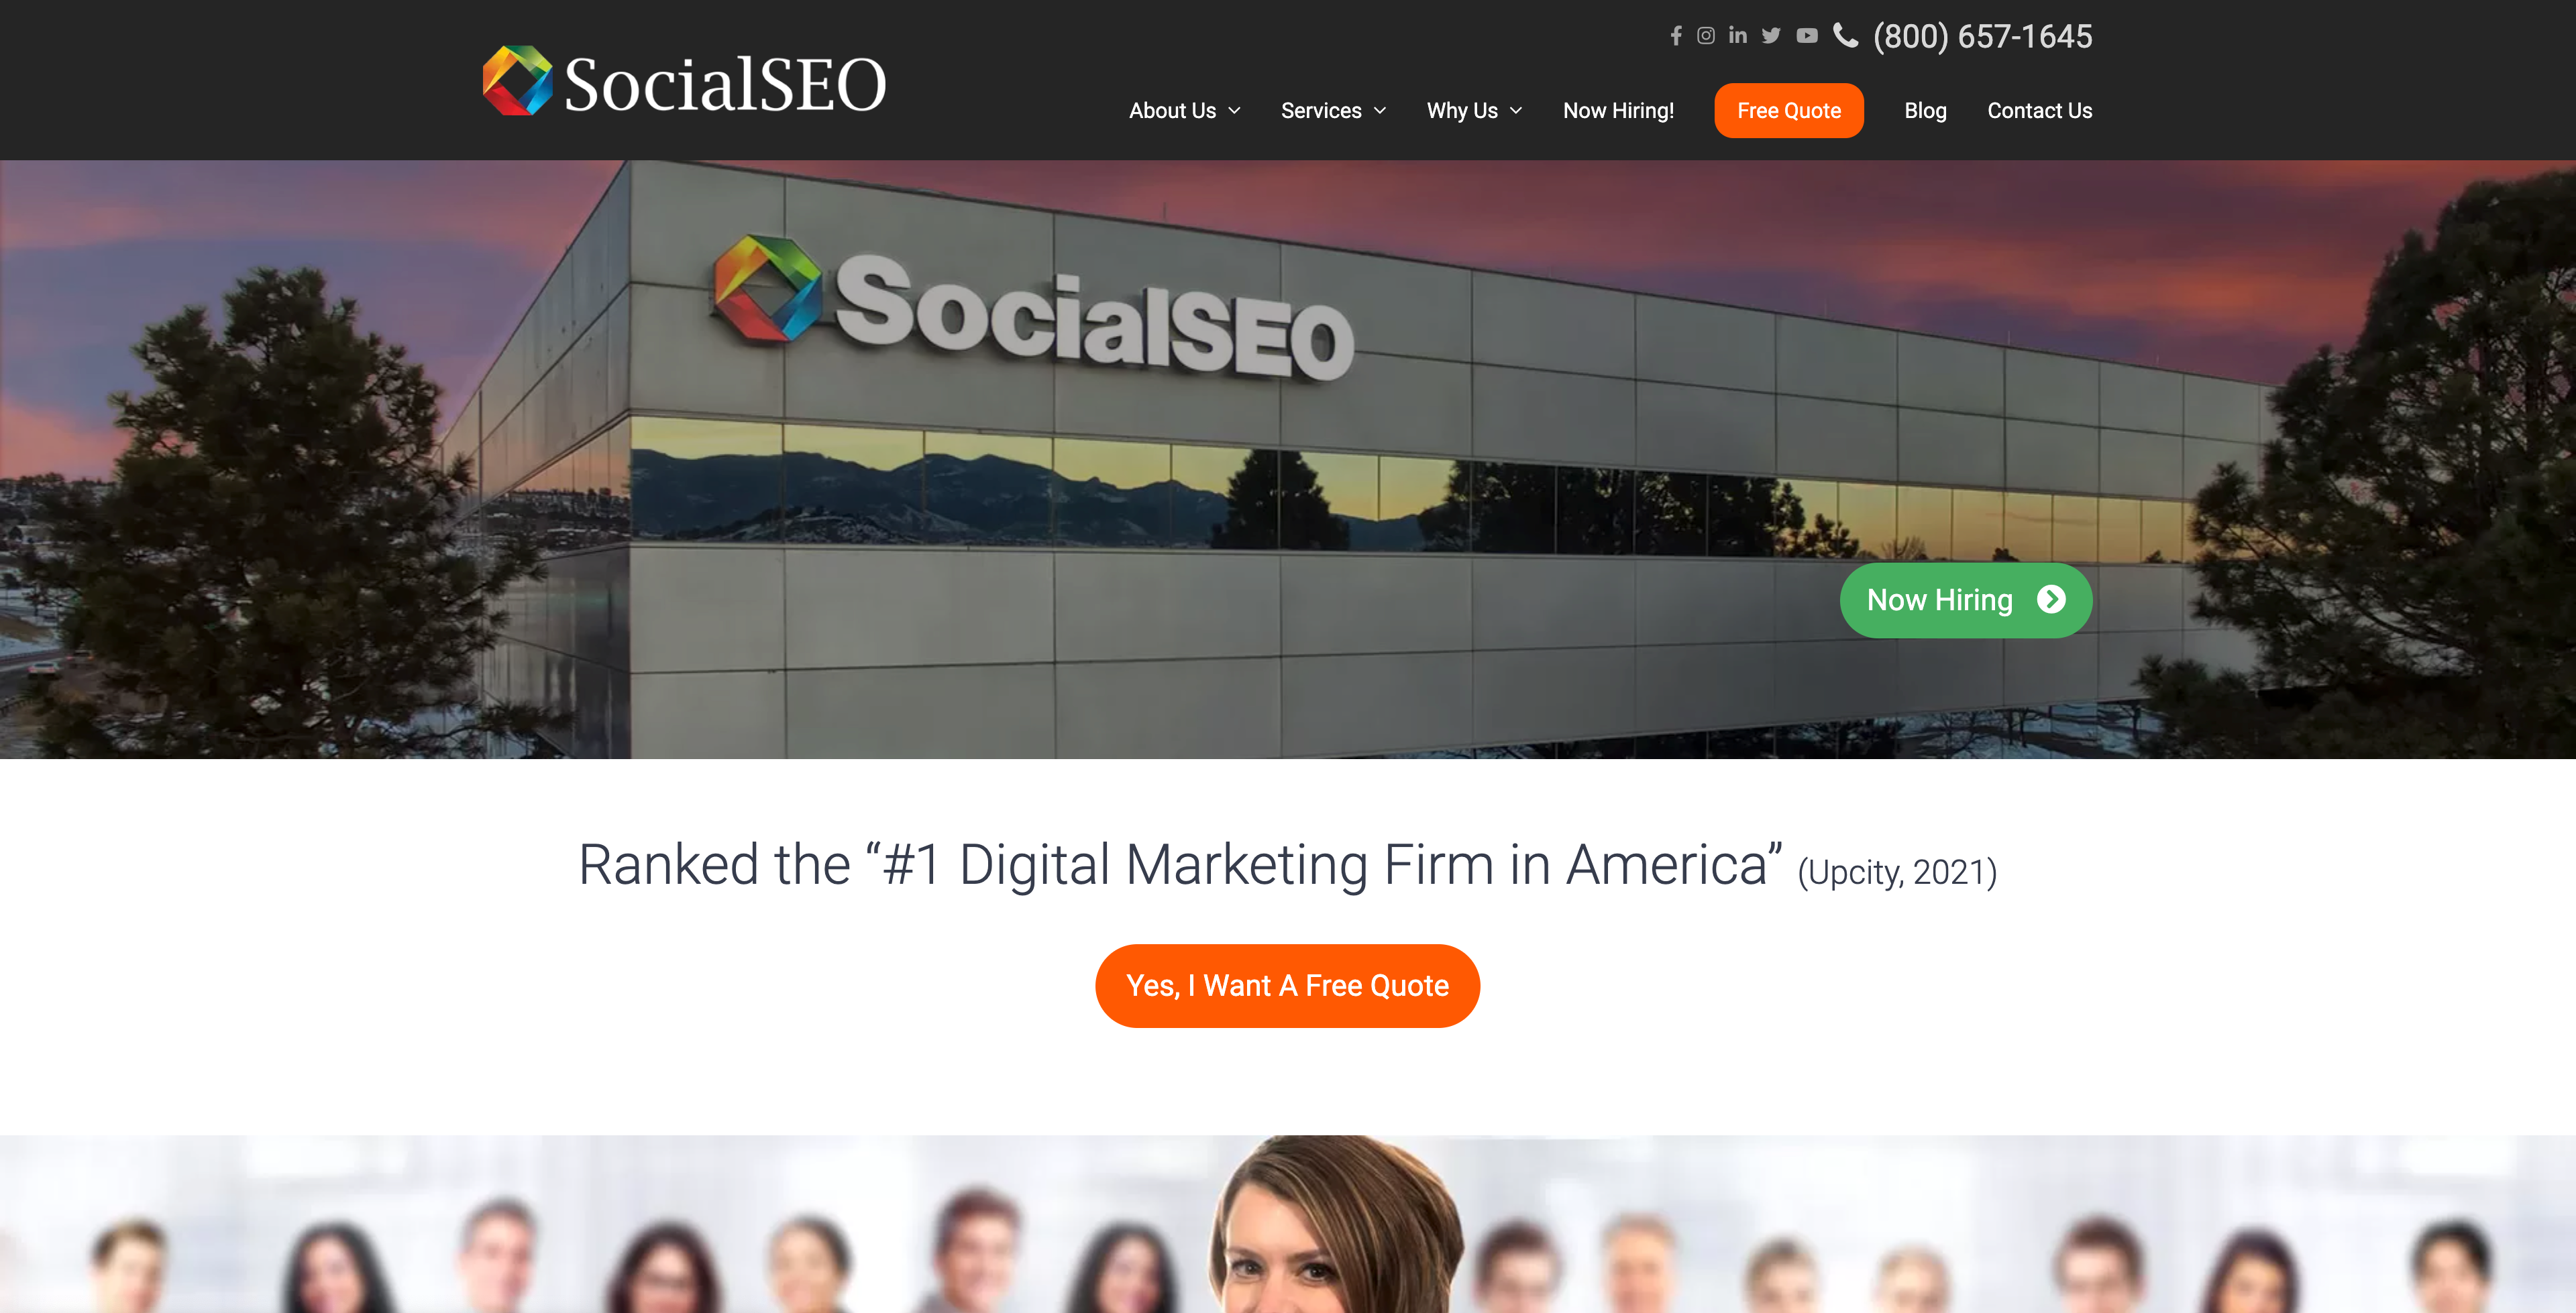 SocialSEO's homepage.